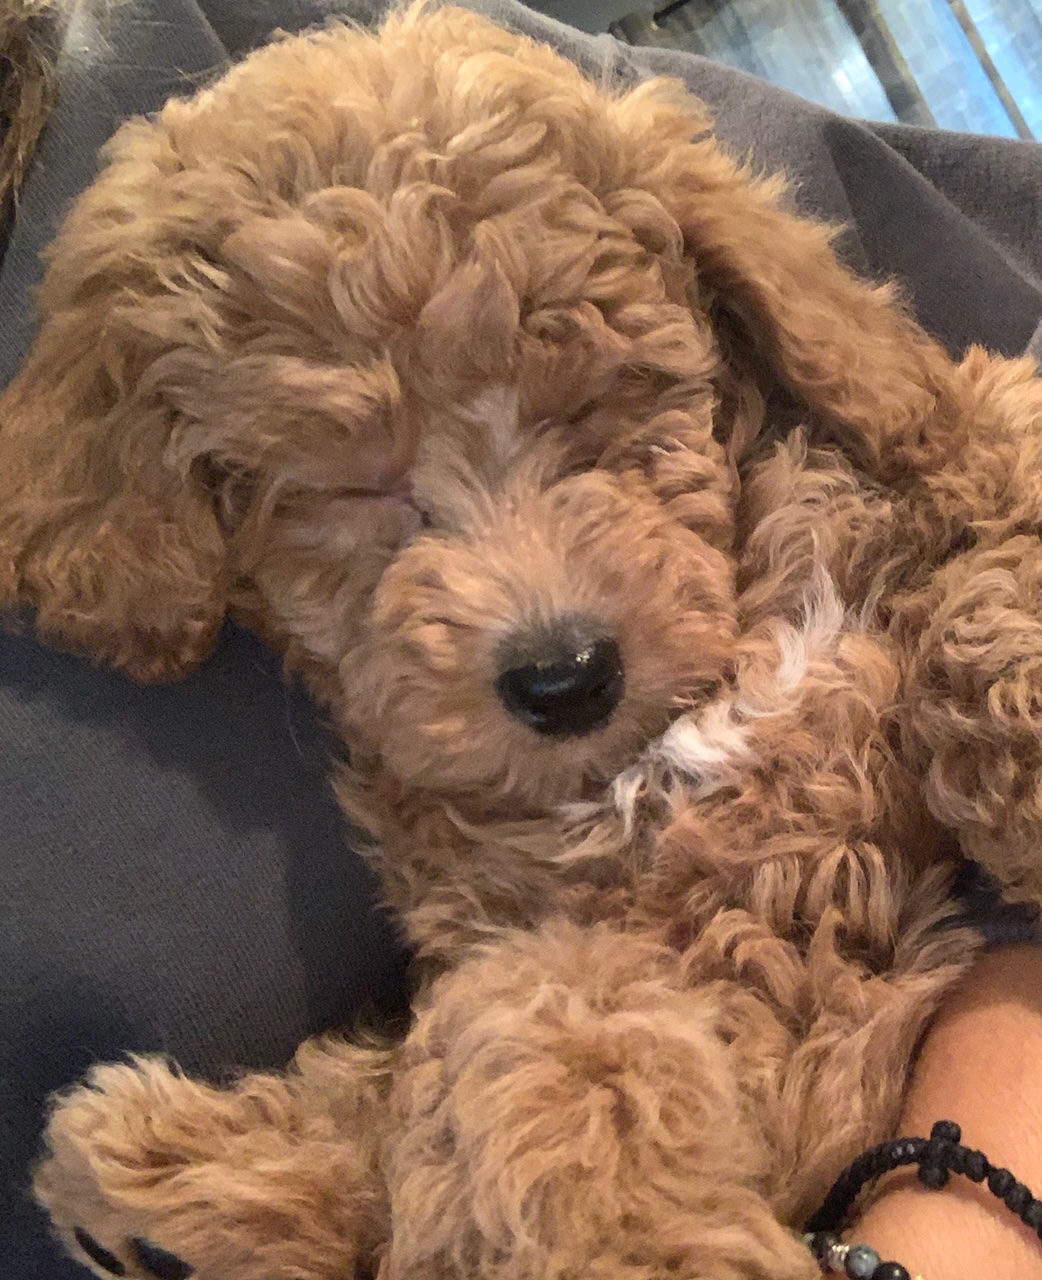 A cute sleeping doodle puppy.